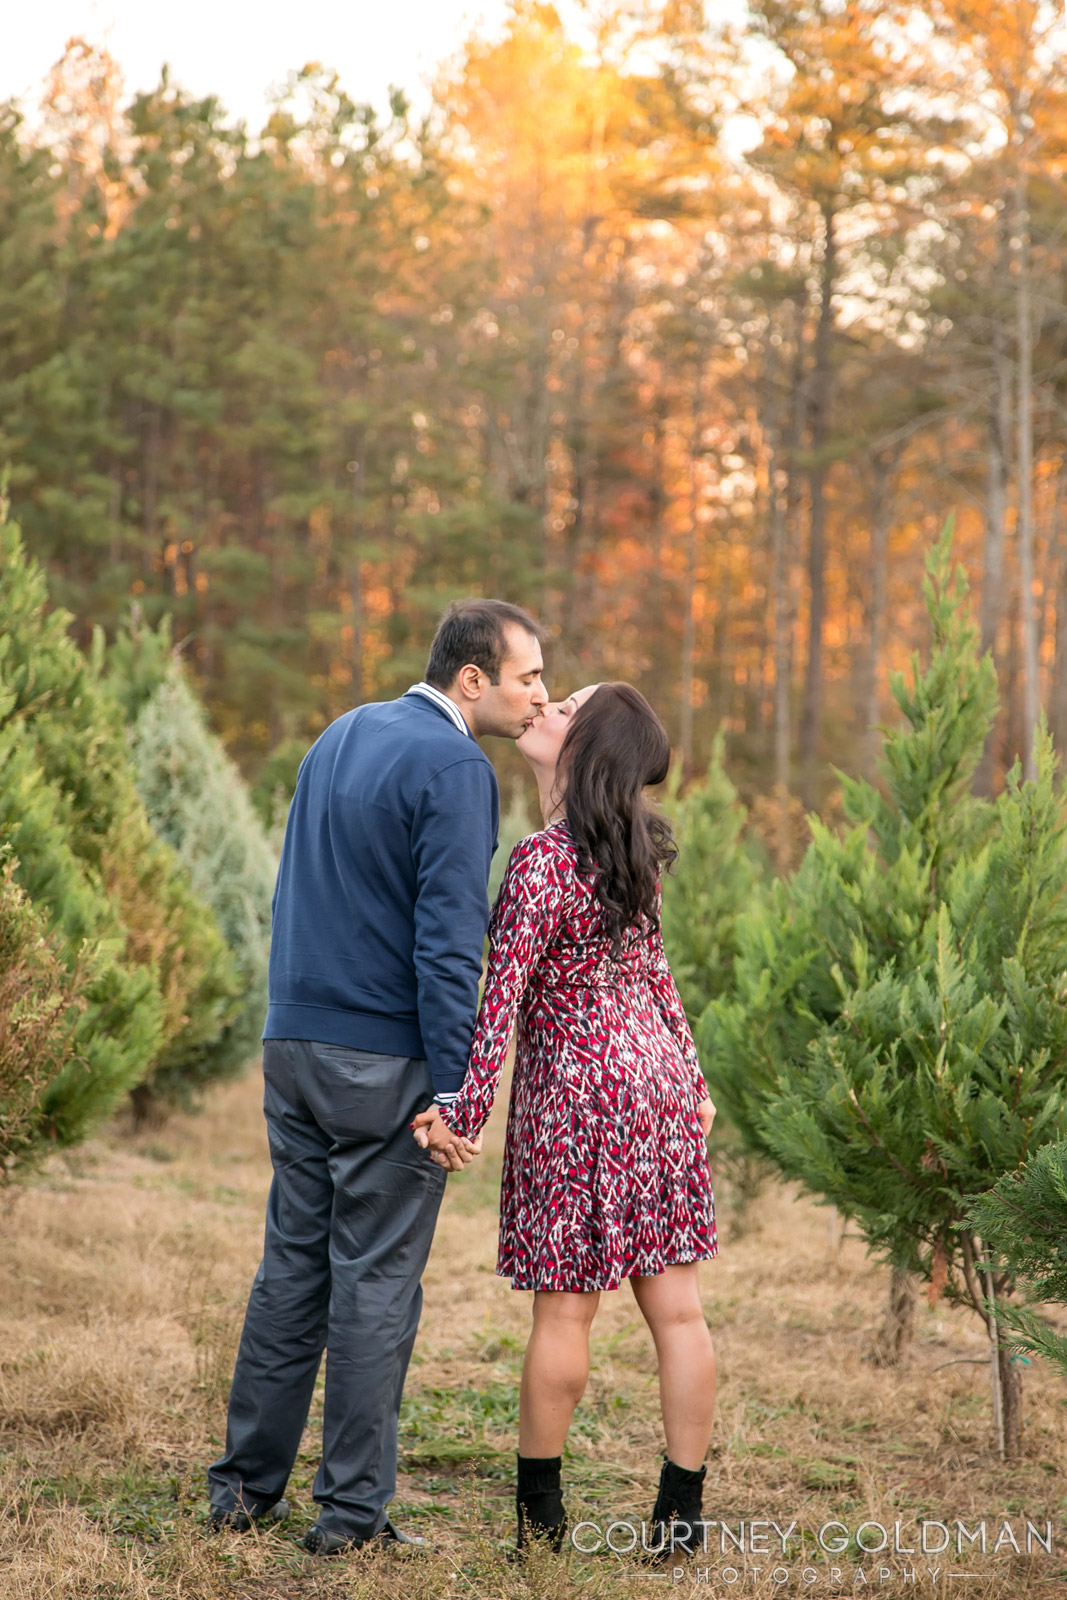 Atlanta-Couples-Engagement-Proposal-Photography-by-Courtney-Goldman-56.jpg